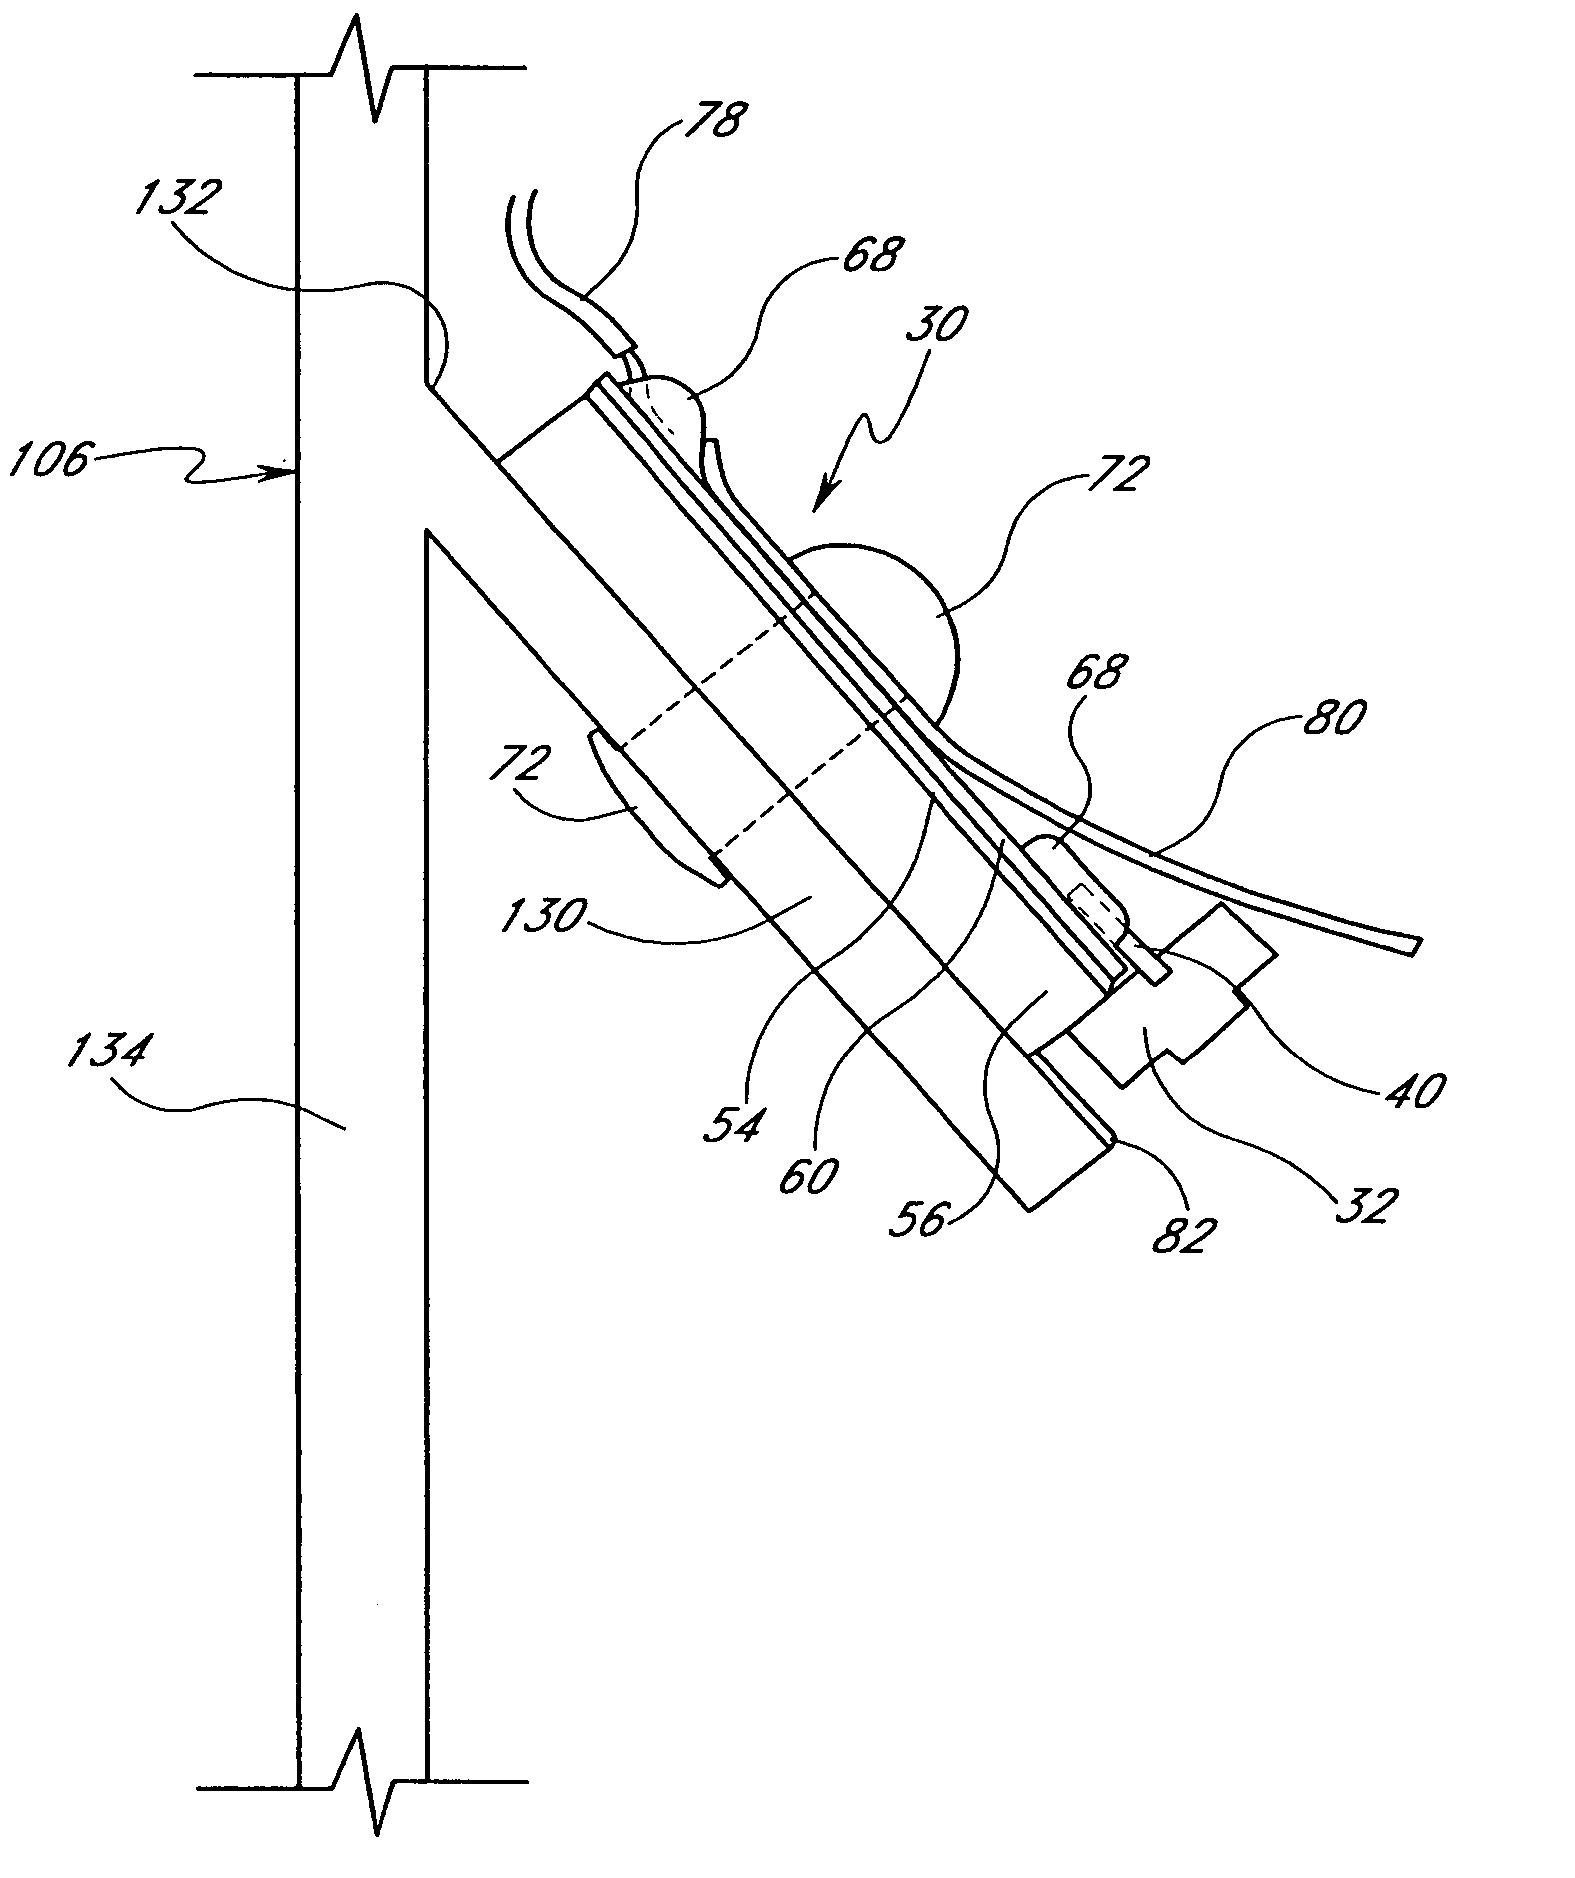 Mounting arrangement for light emitting diodes